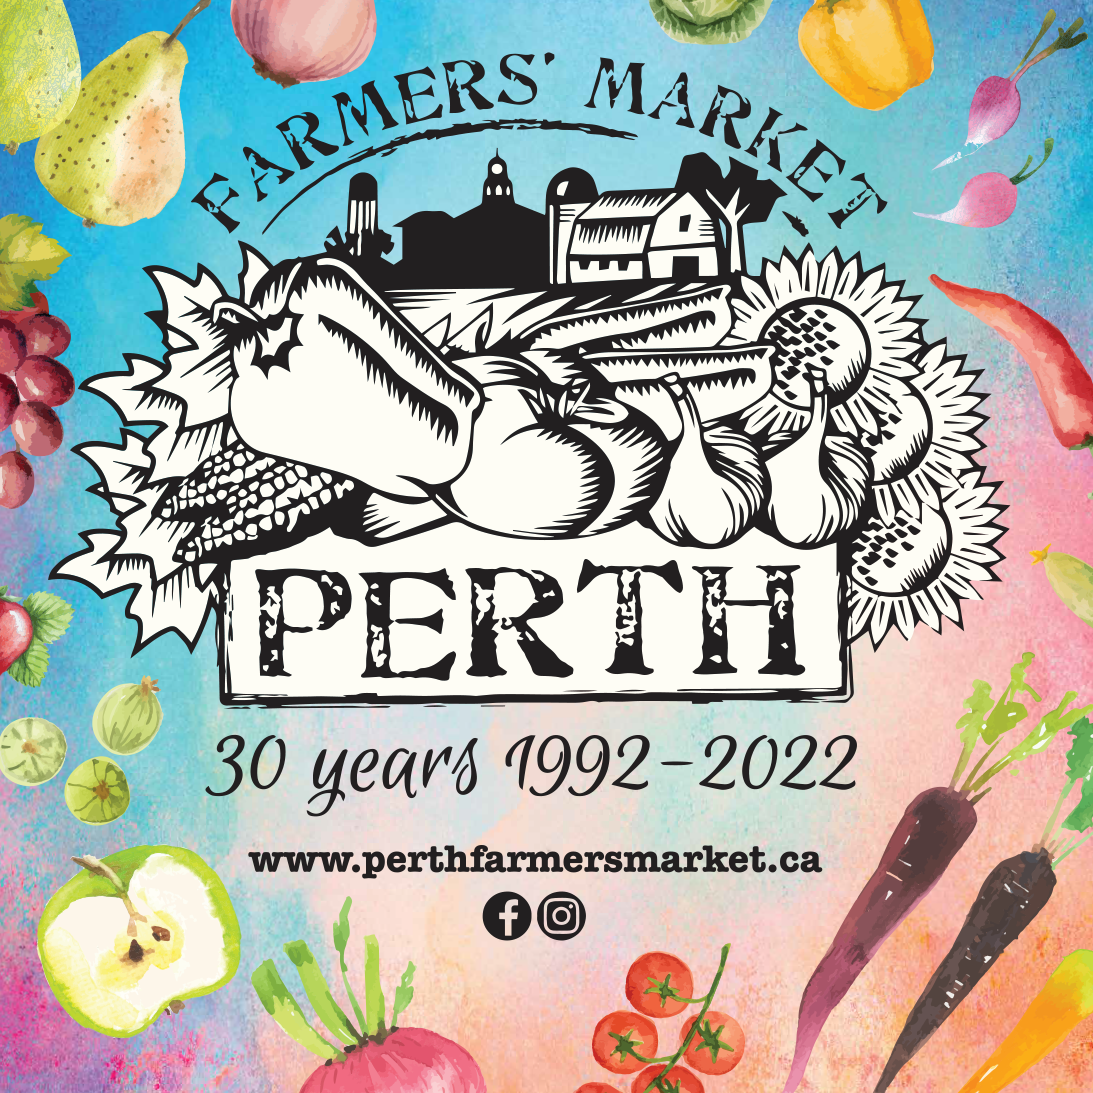 Perth Farmers Market